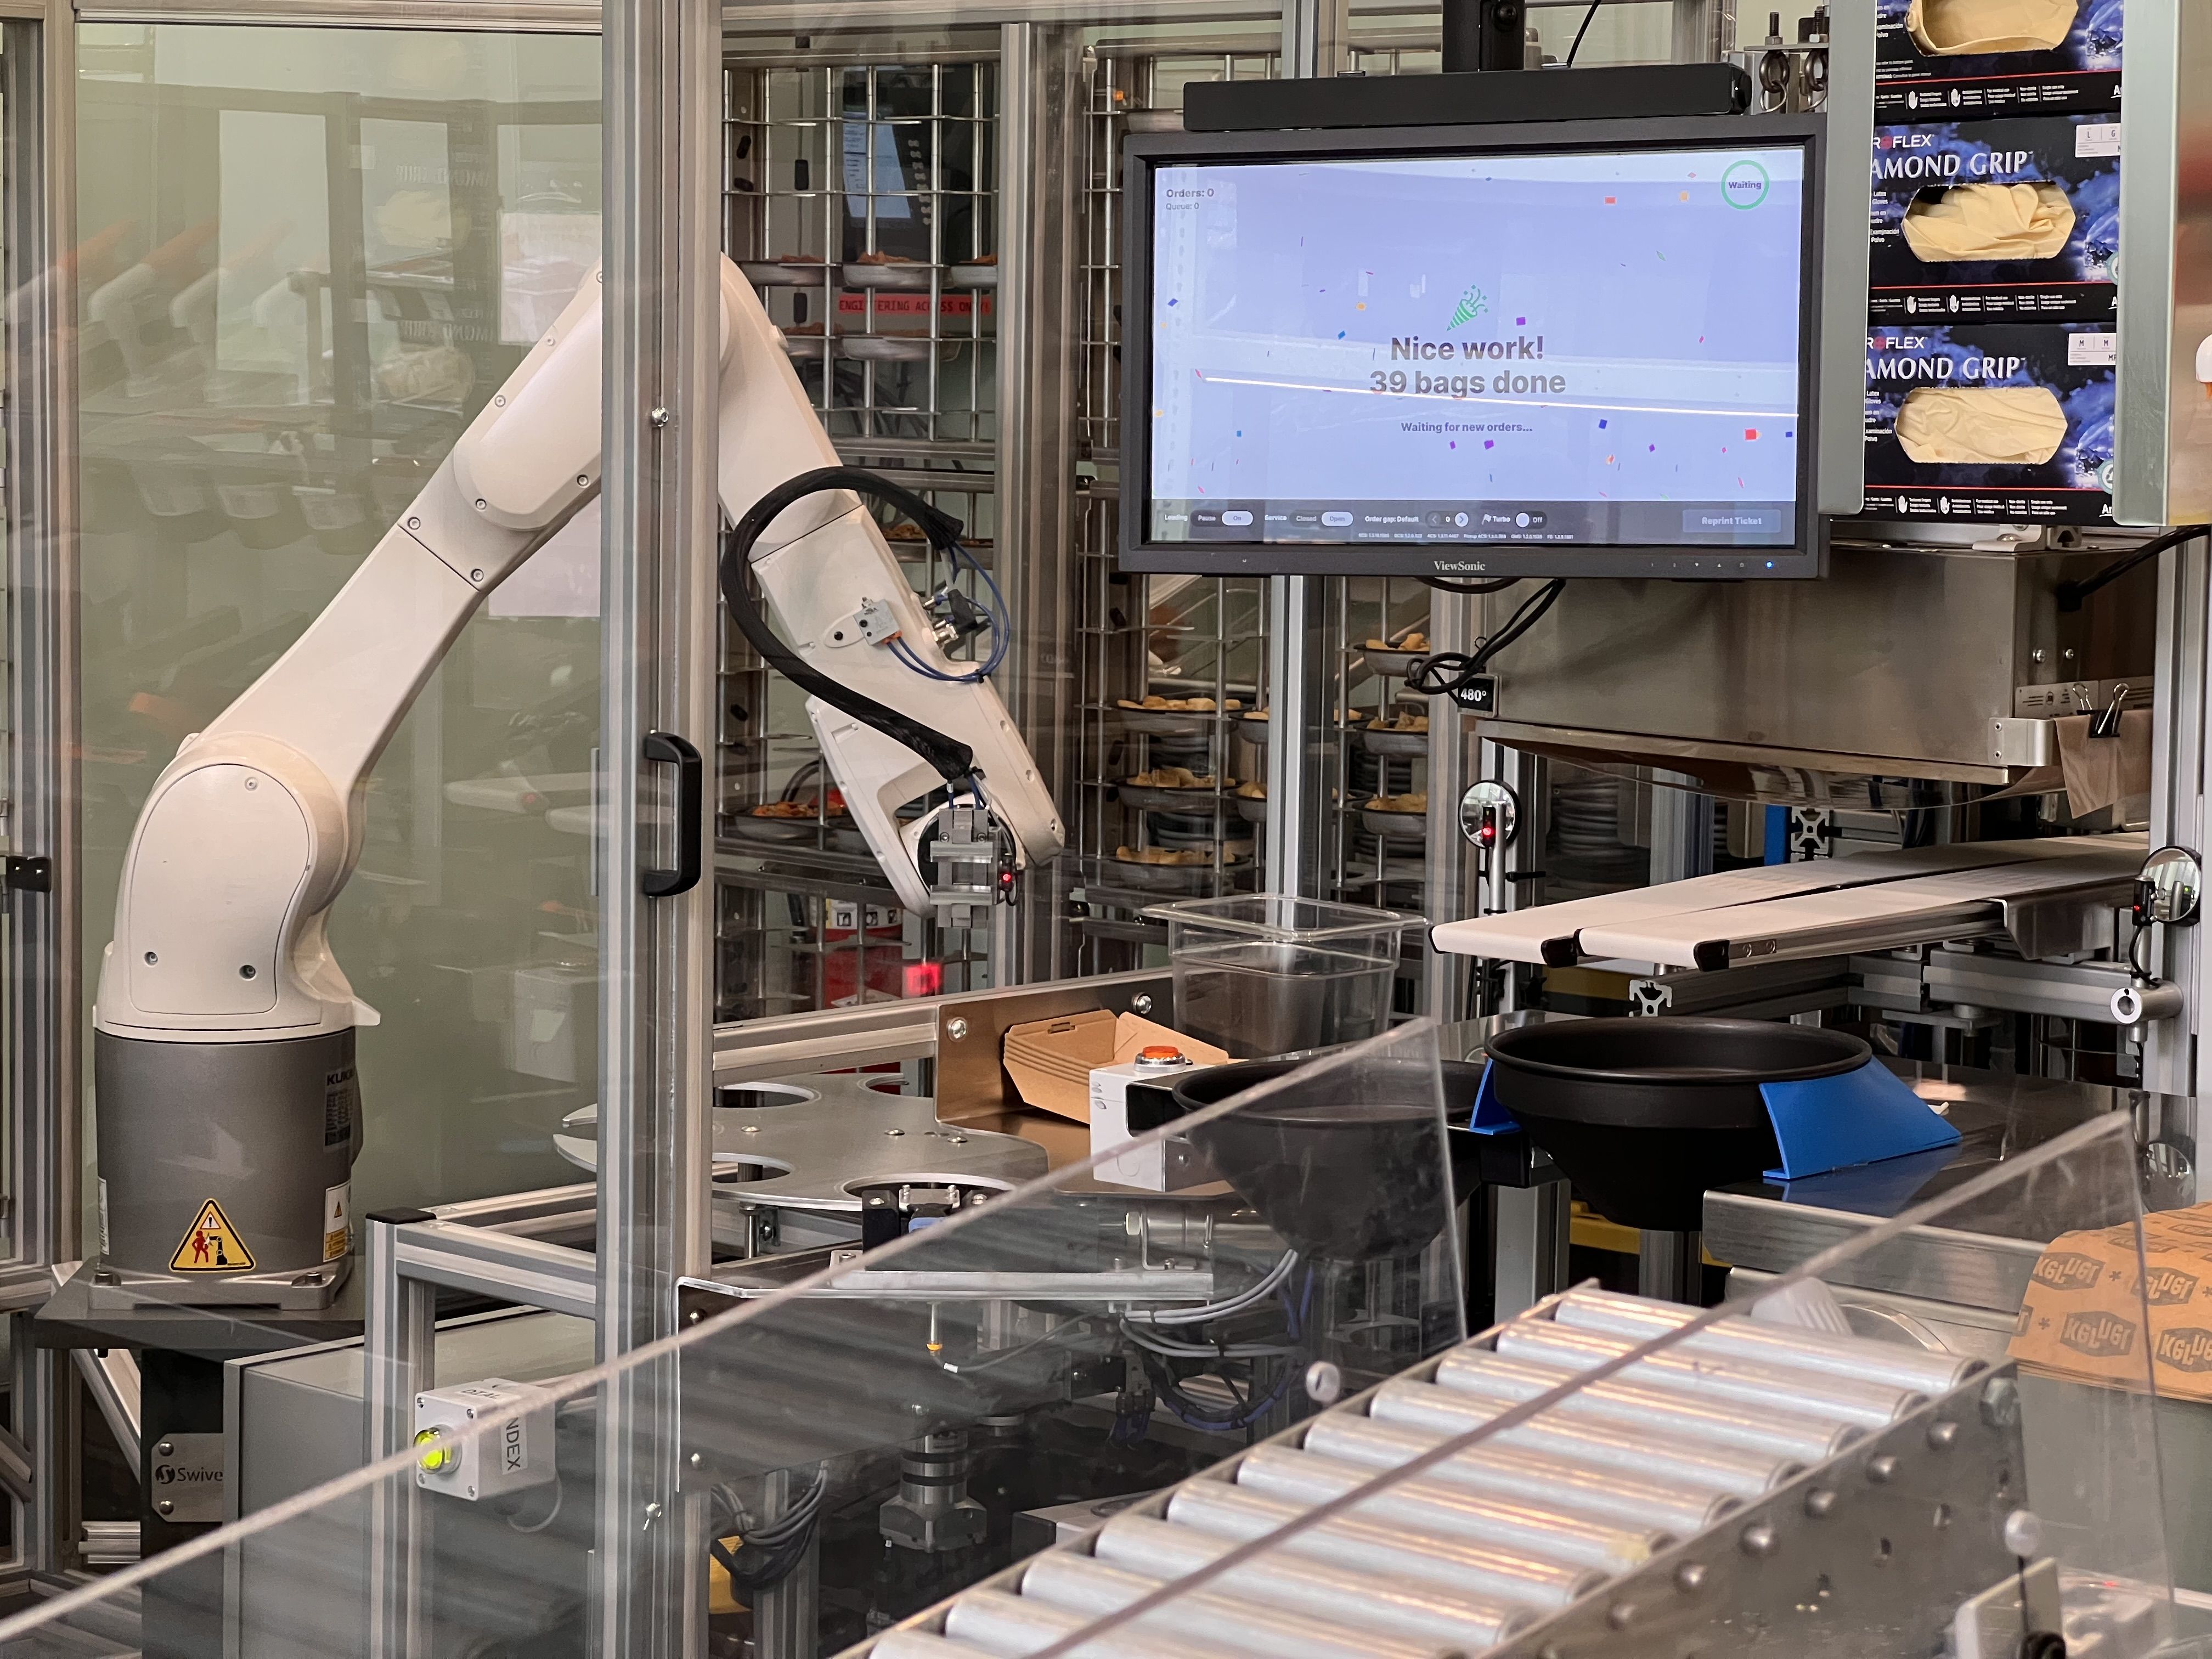 A robot arm prepares food nest to a screen that displays order progress.